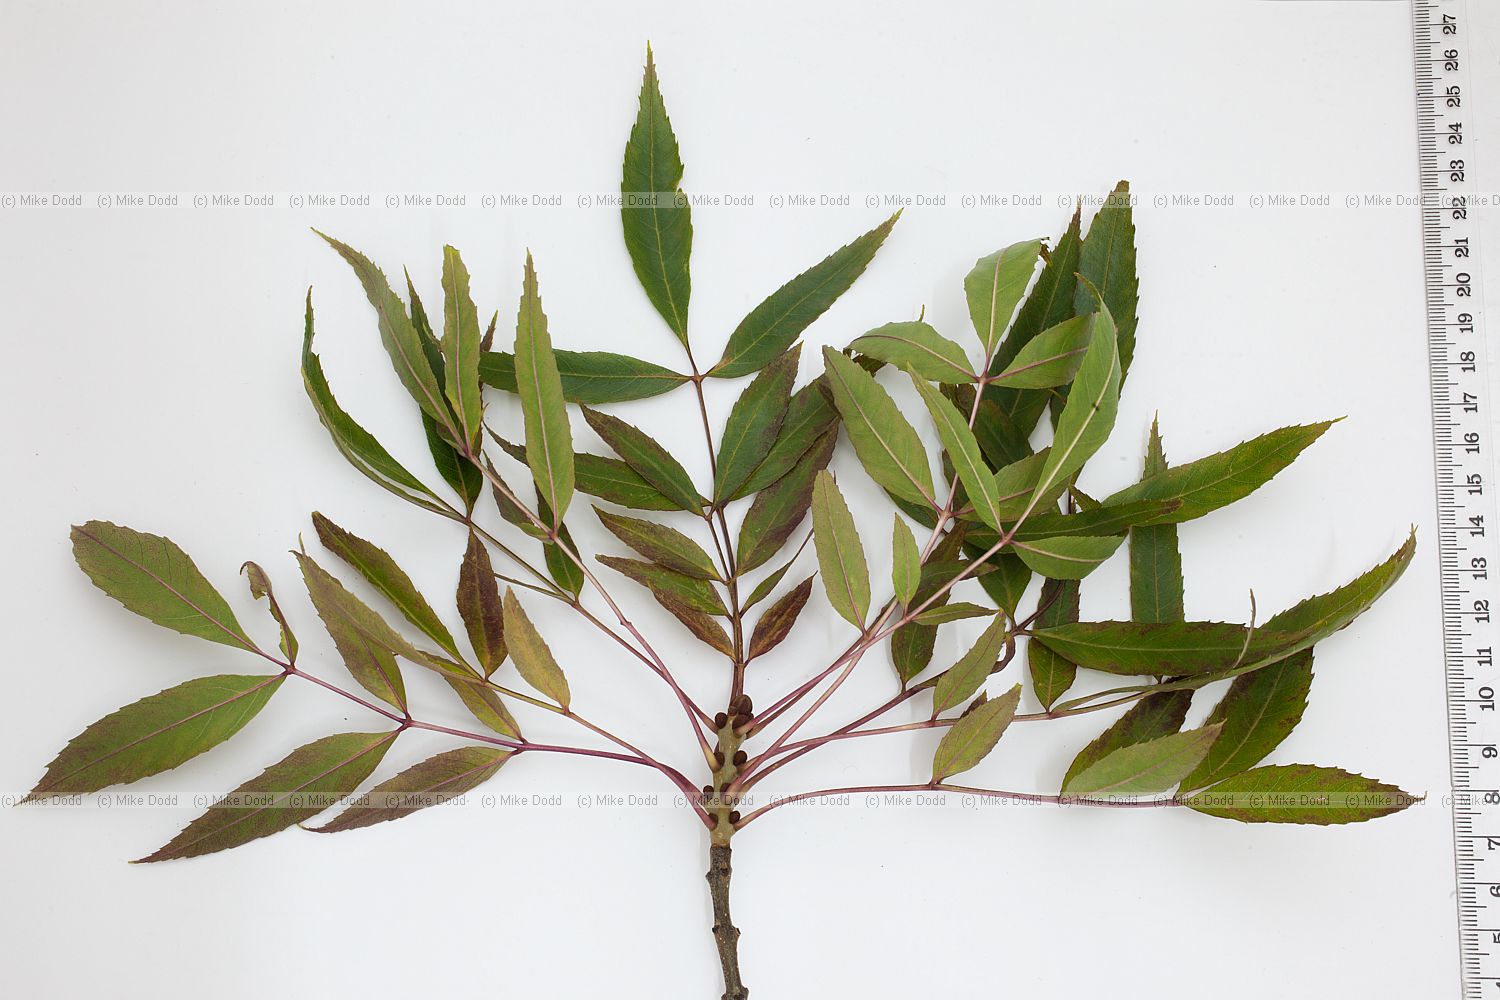 Fraxinus angustifolia ssp oxycarpa 'Raywood' Claret Ash